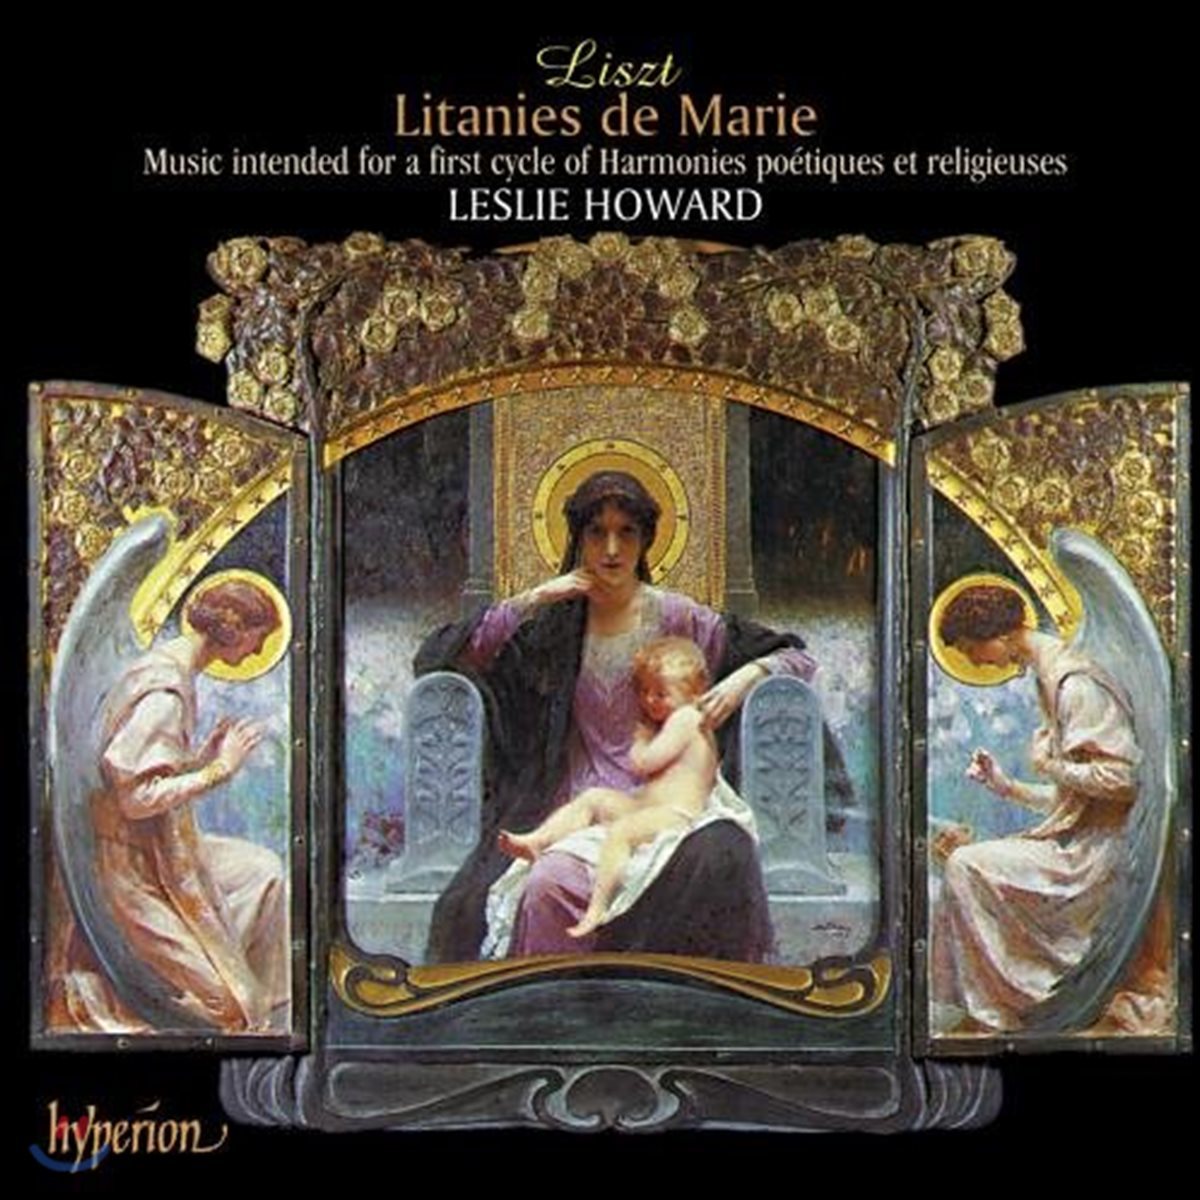 Leslie Howard 리스트: 마리아의 탄식 (Liszt: Litanies de Marie)